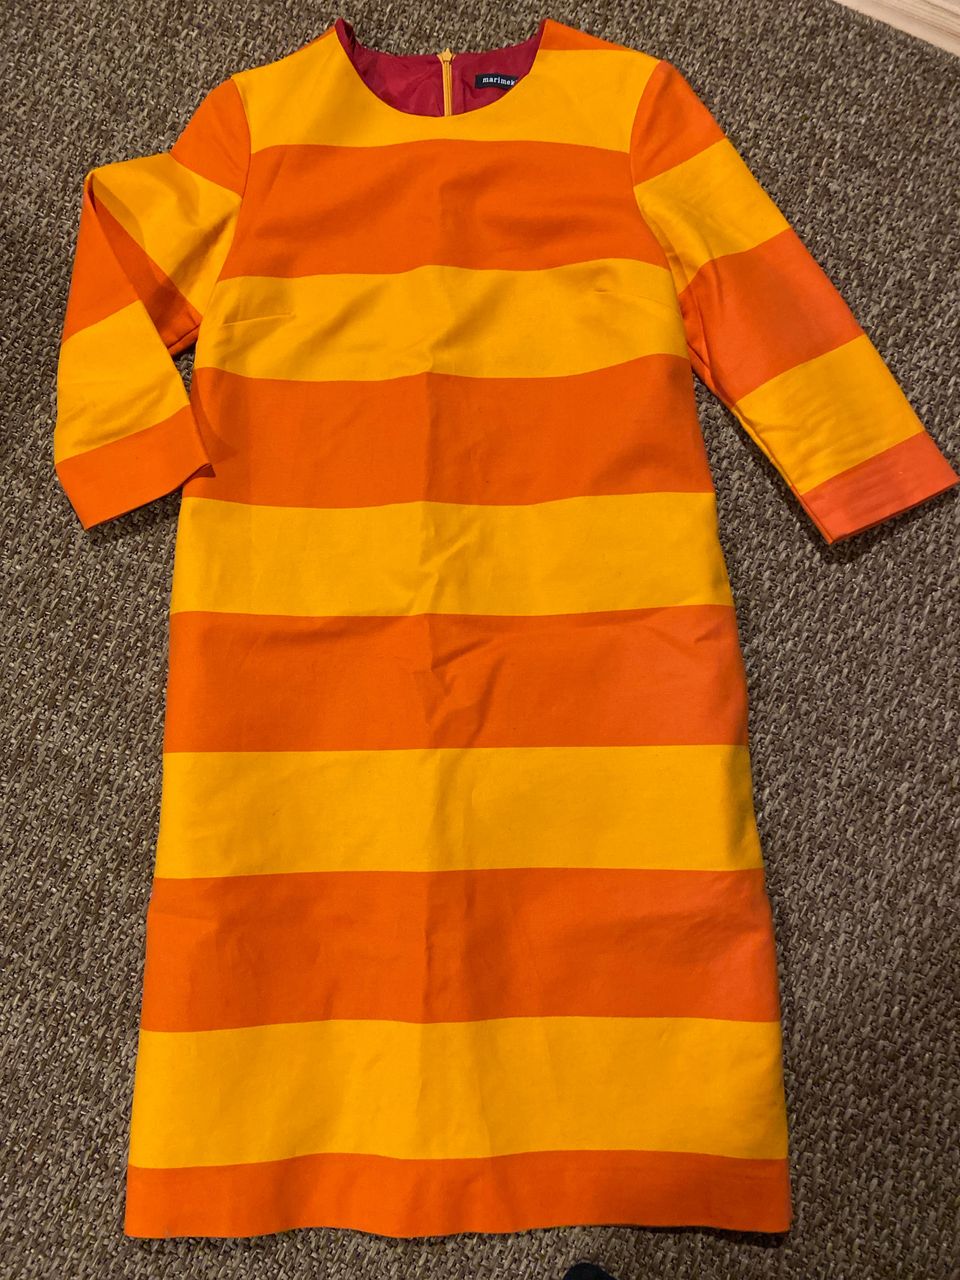 Marimekko Eerika oranssi mekko koko 36